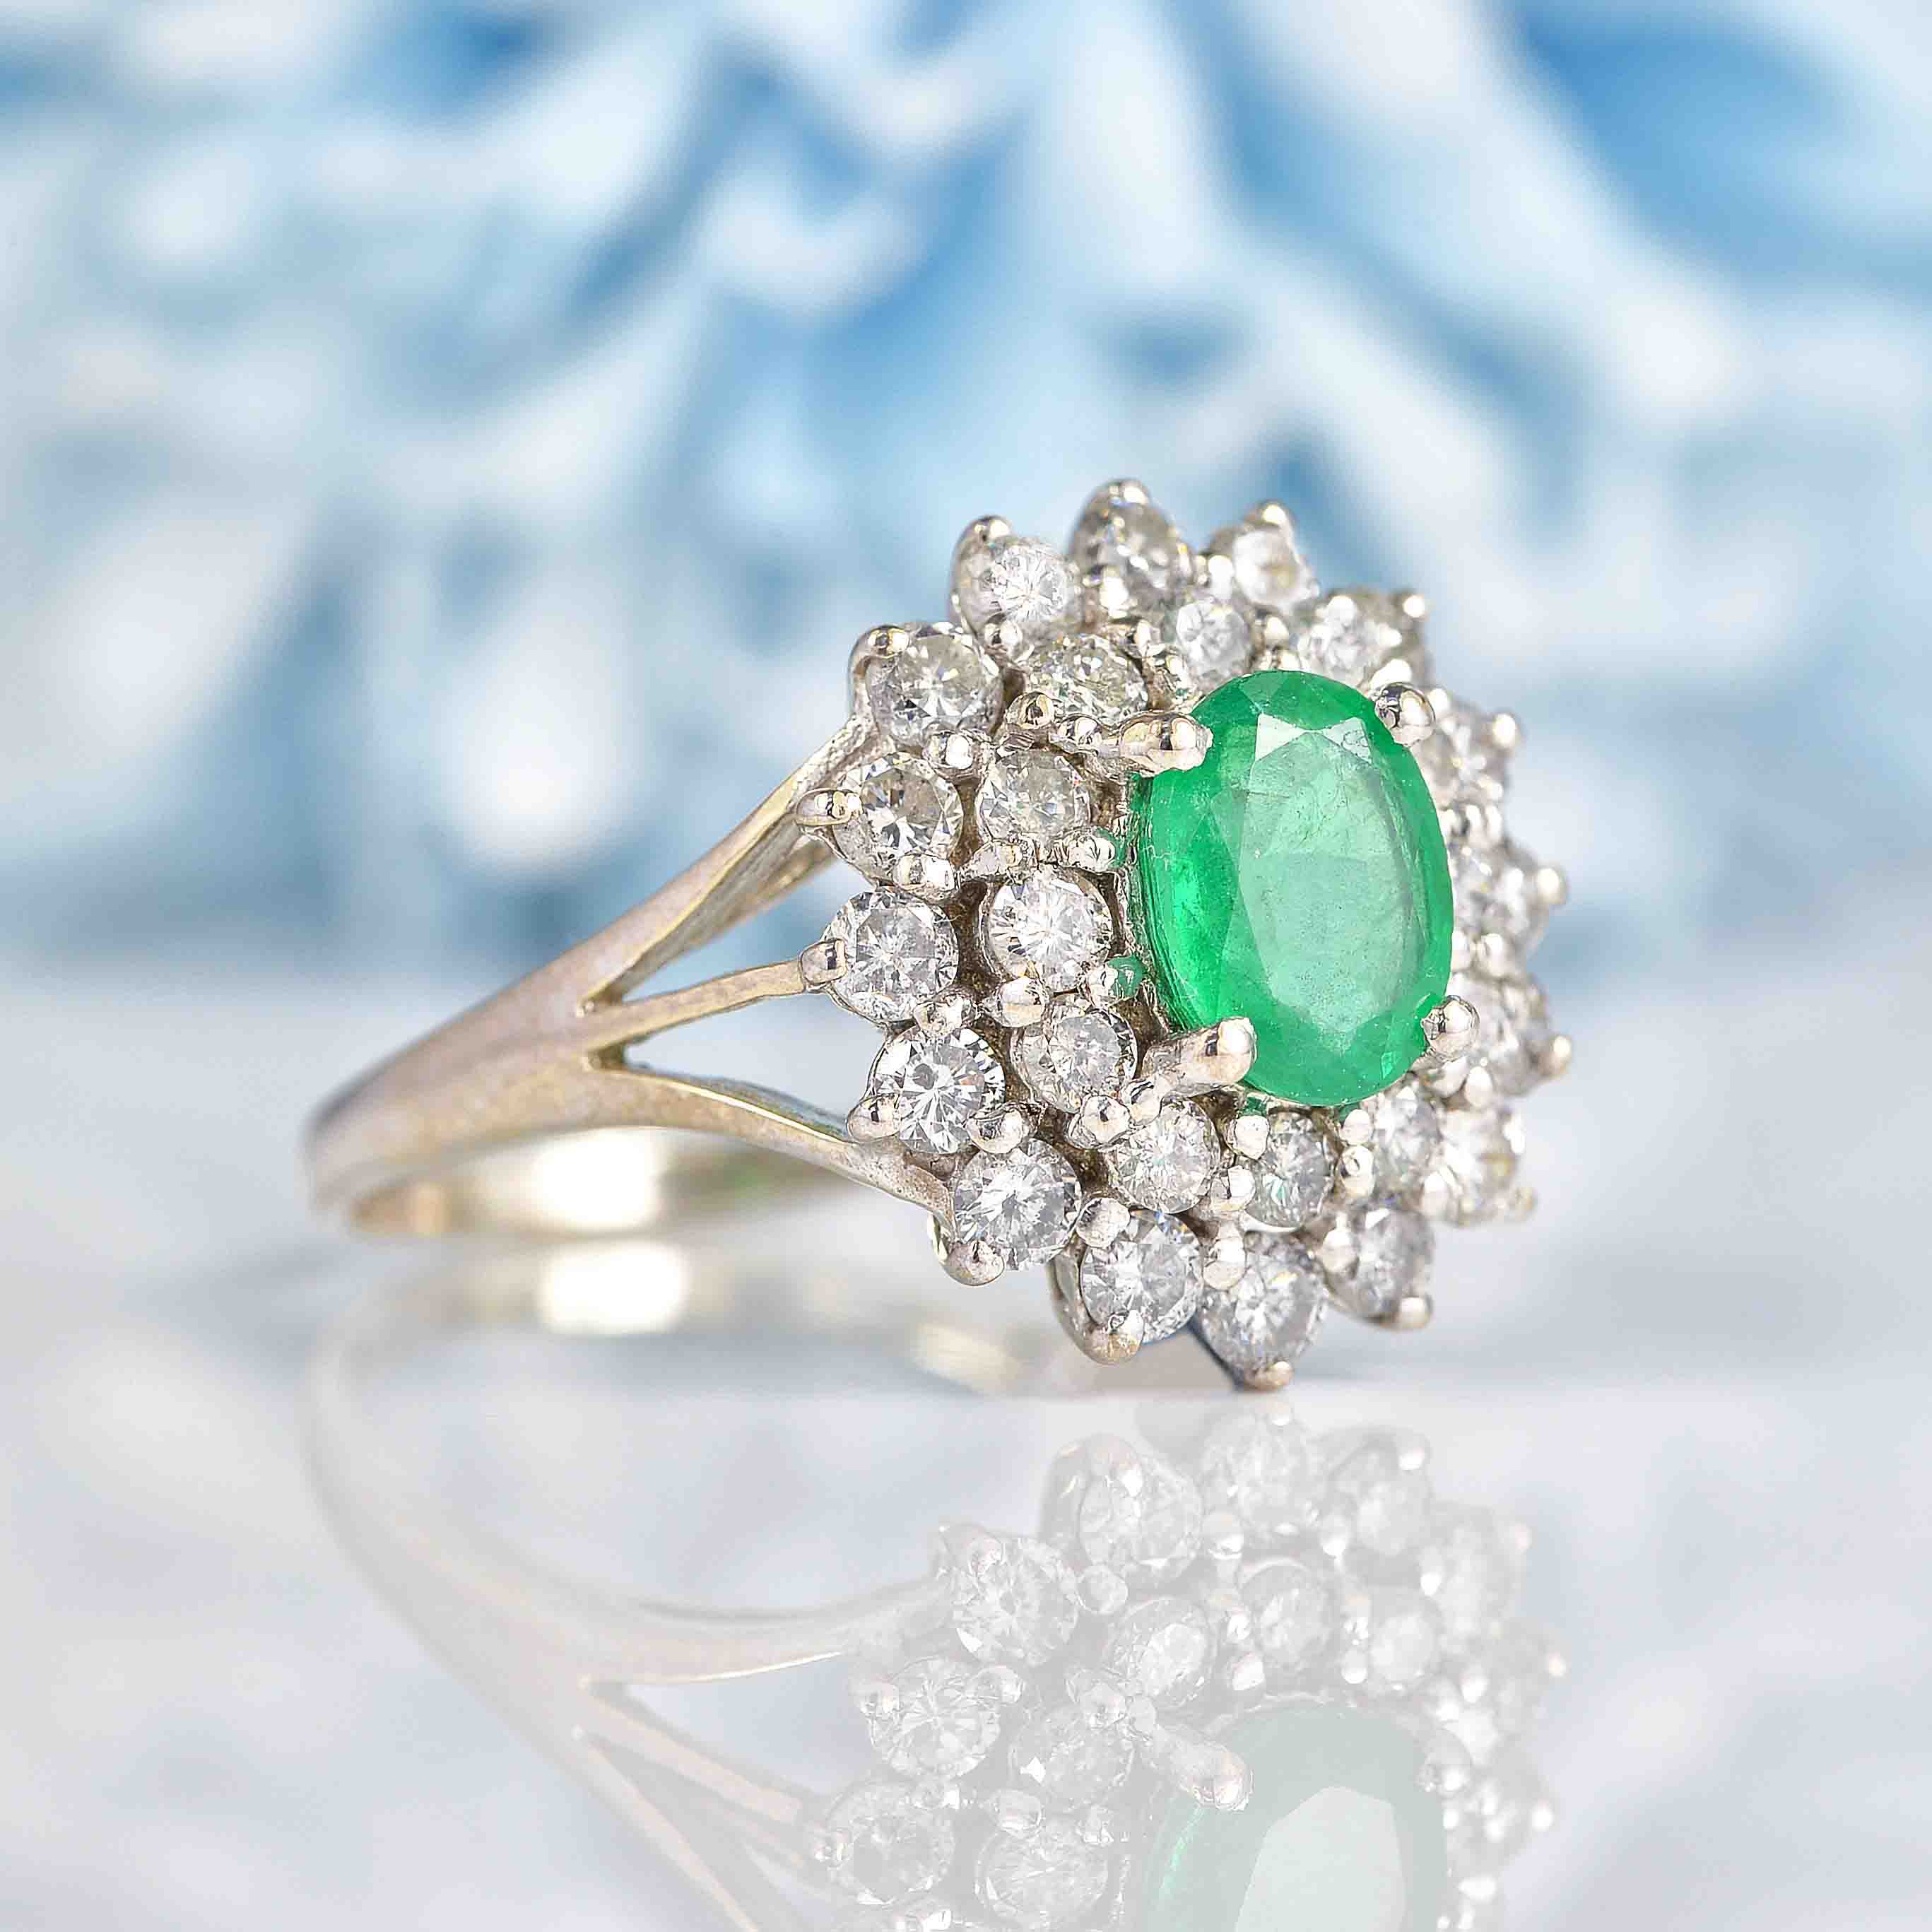 Ellibelle Jewellery Vintage 2000 Emerald & Diamond 18ct White Gold Cluster Ring